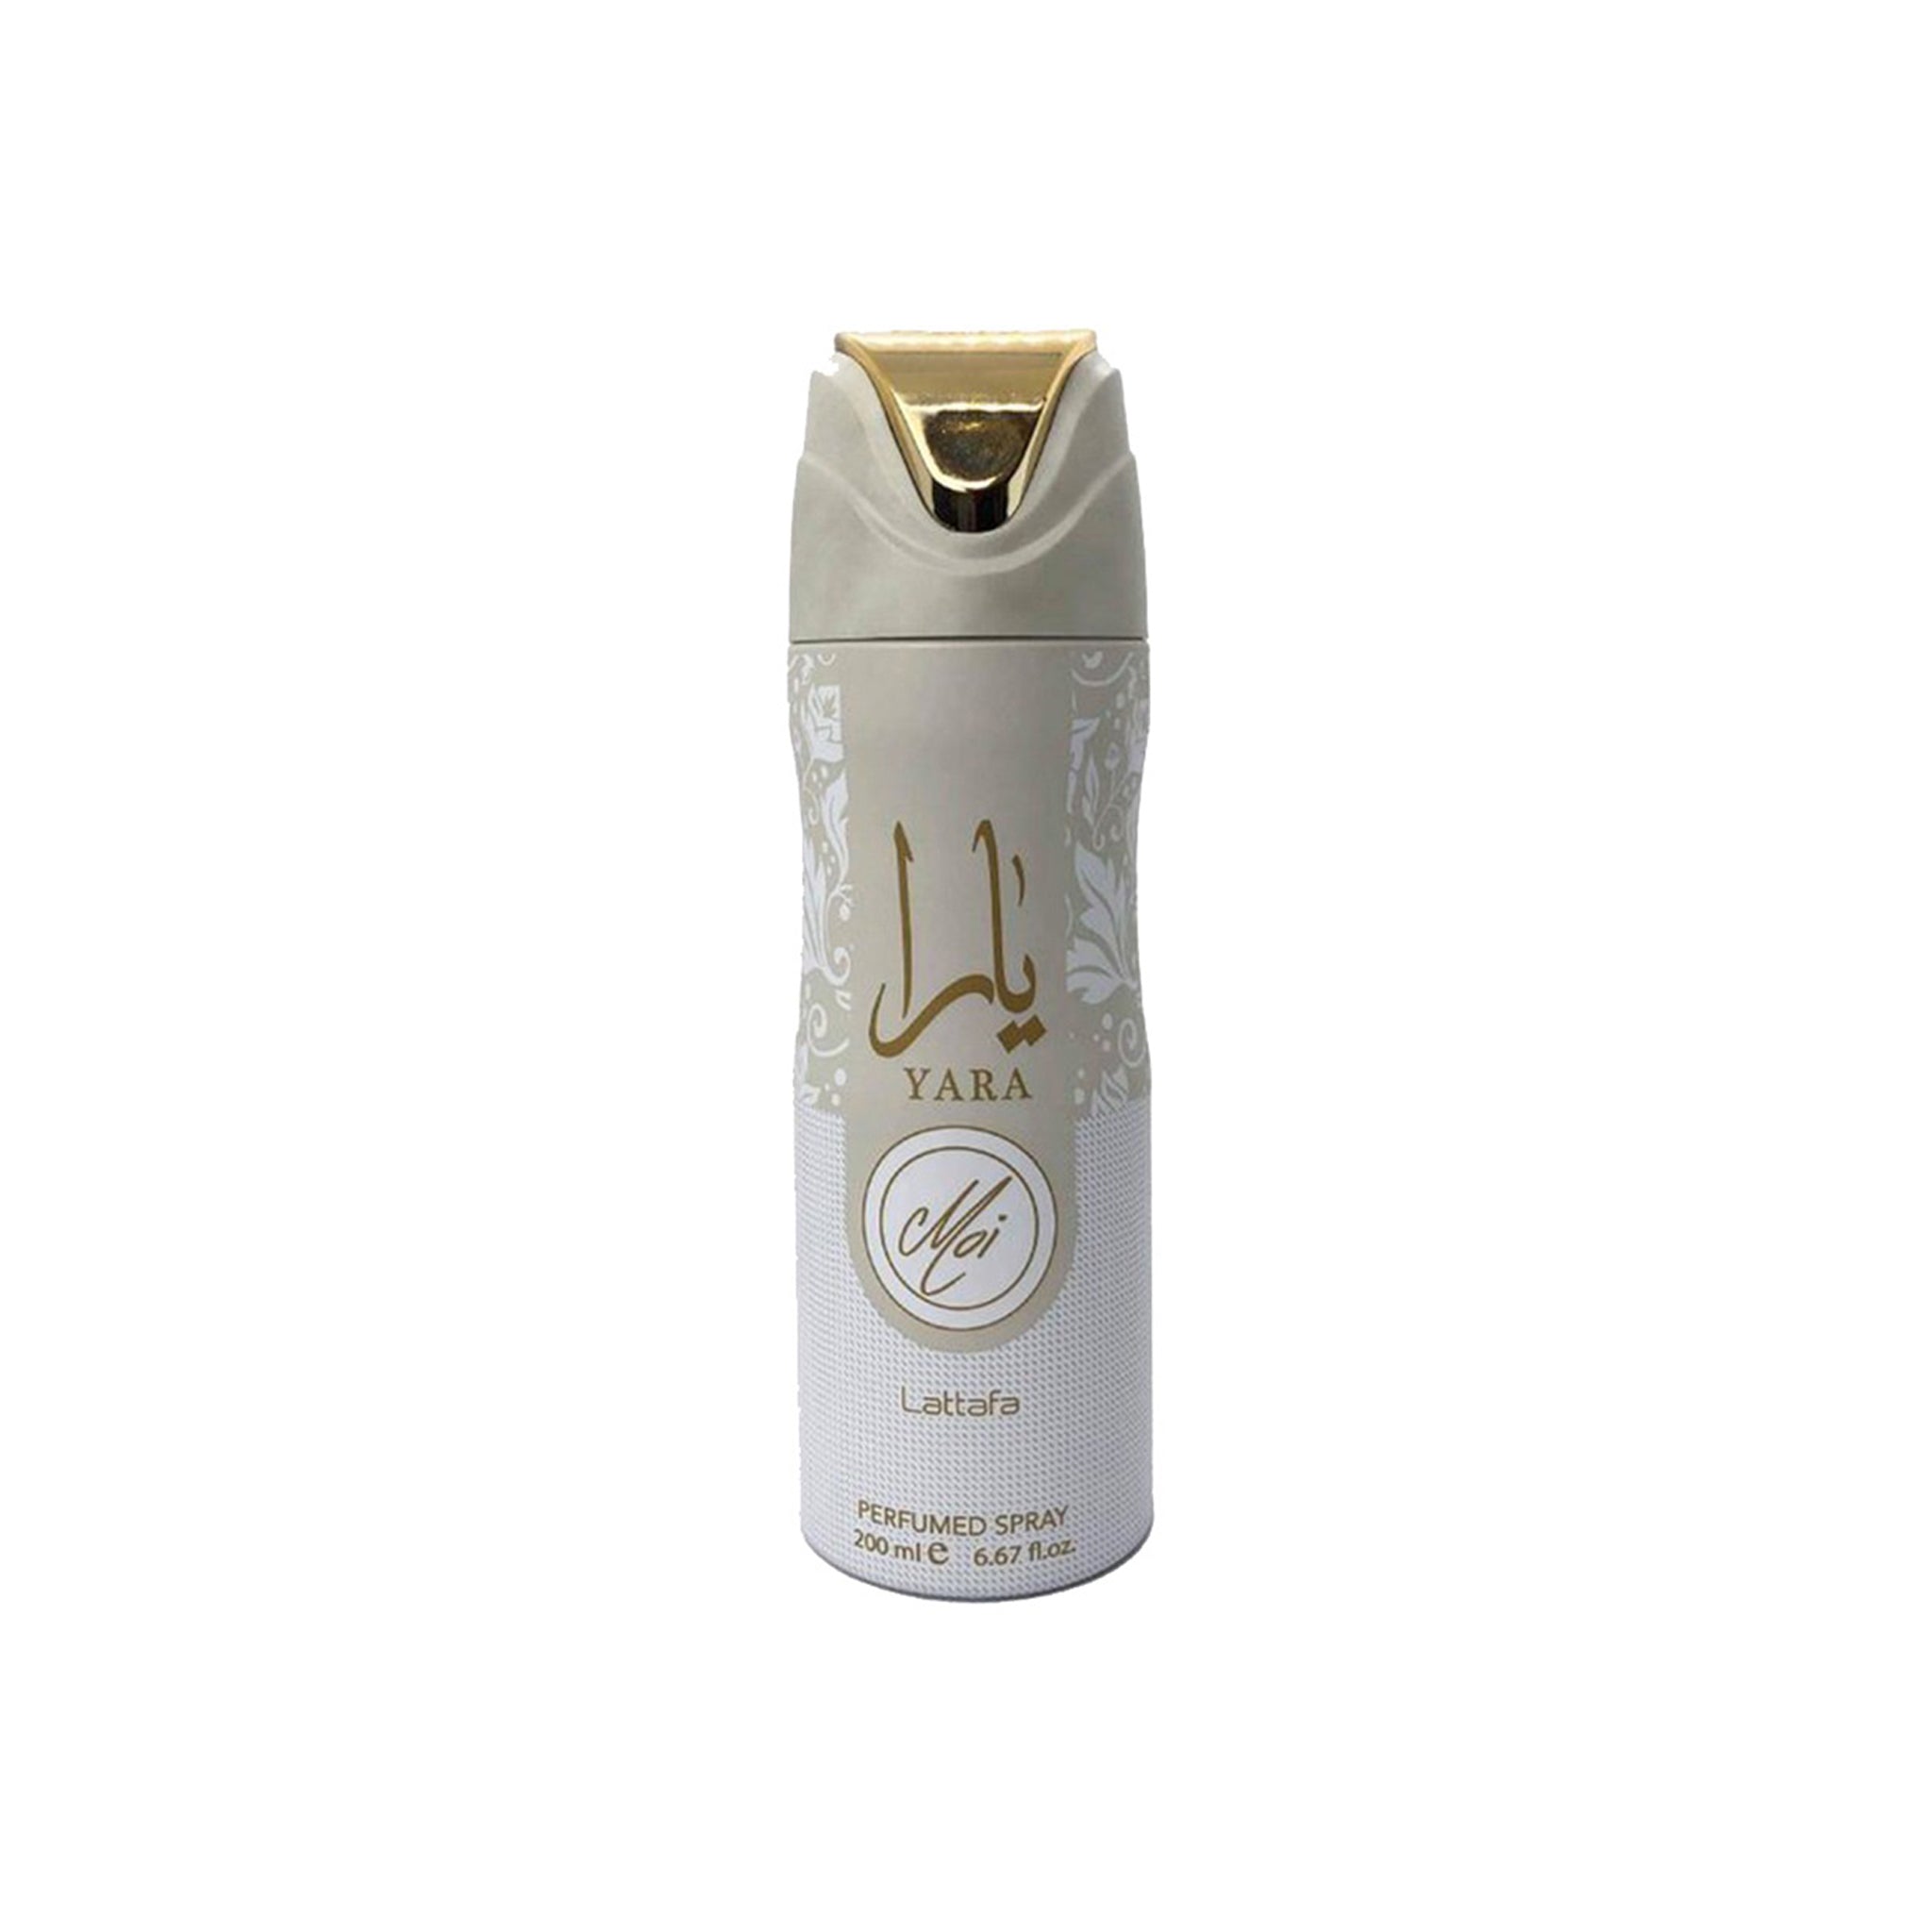 Yara Moi (White) Deodorant 200ml by Lattafa